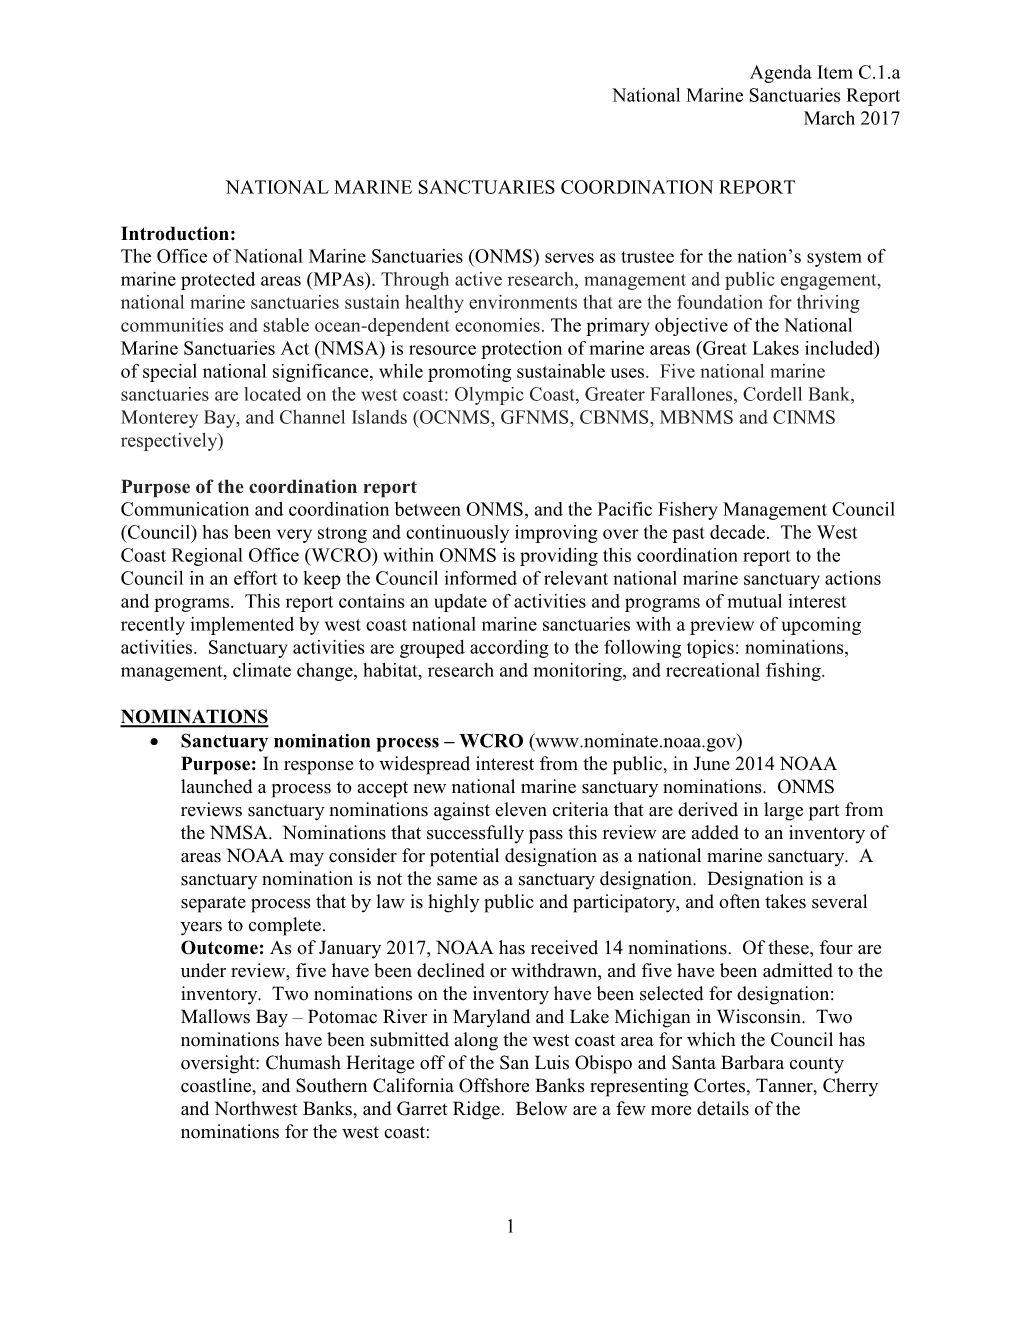 1 Agenda Item C.1.A National Marine Sanctuaries Report March